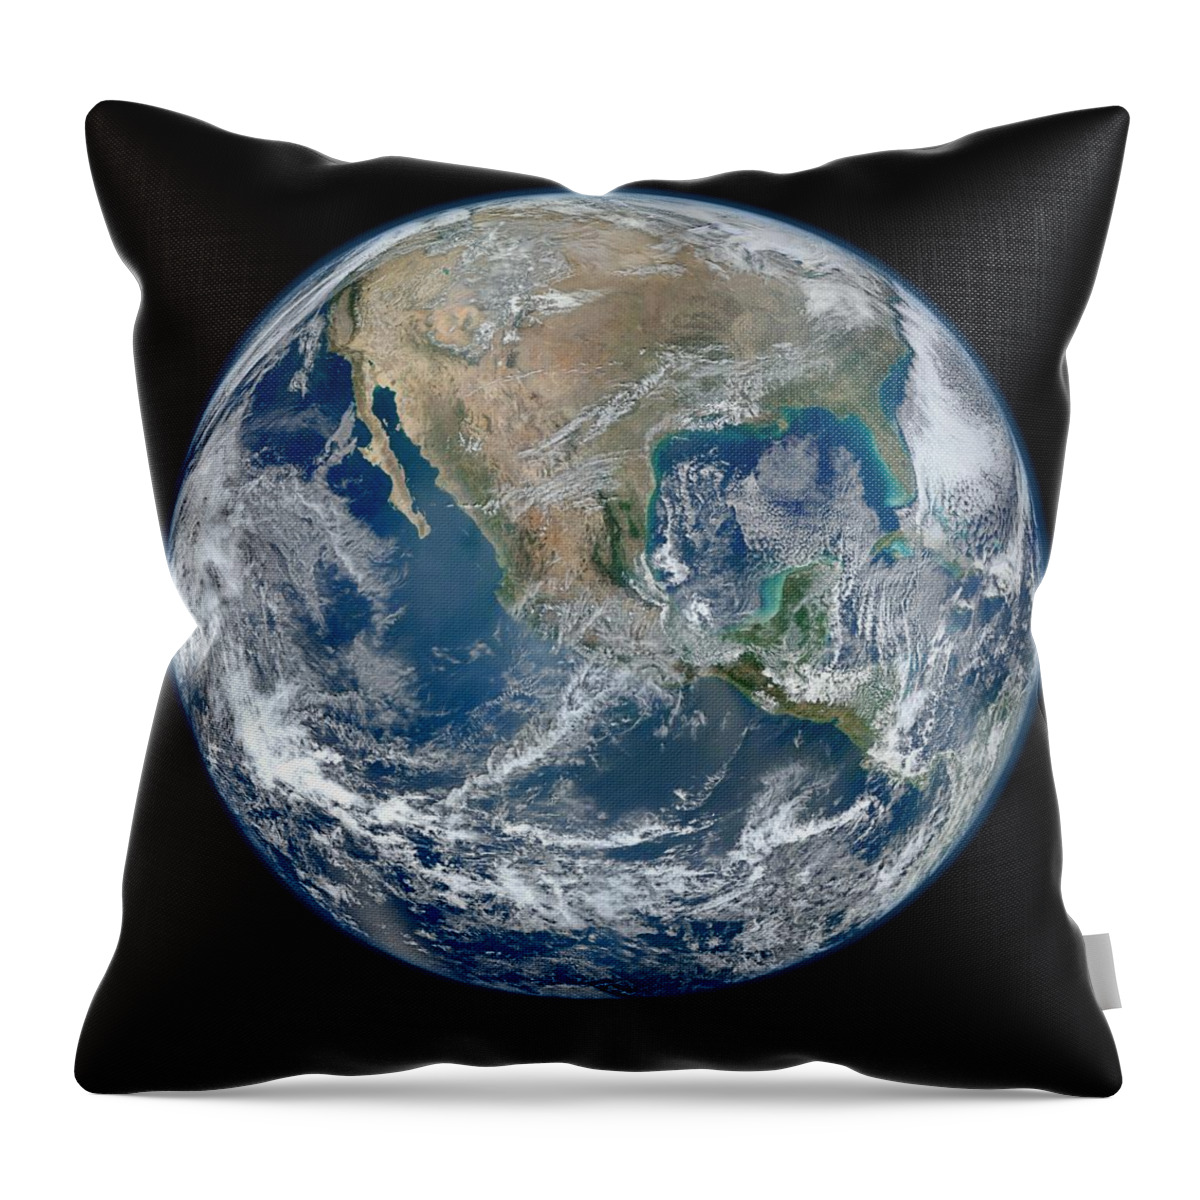 Earthnasa Jpl Throw Pillow featuring the photograph Earth by Nasa Jpl